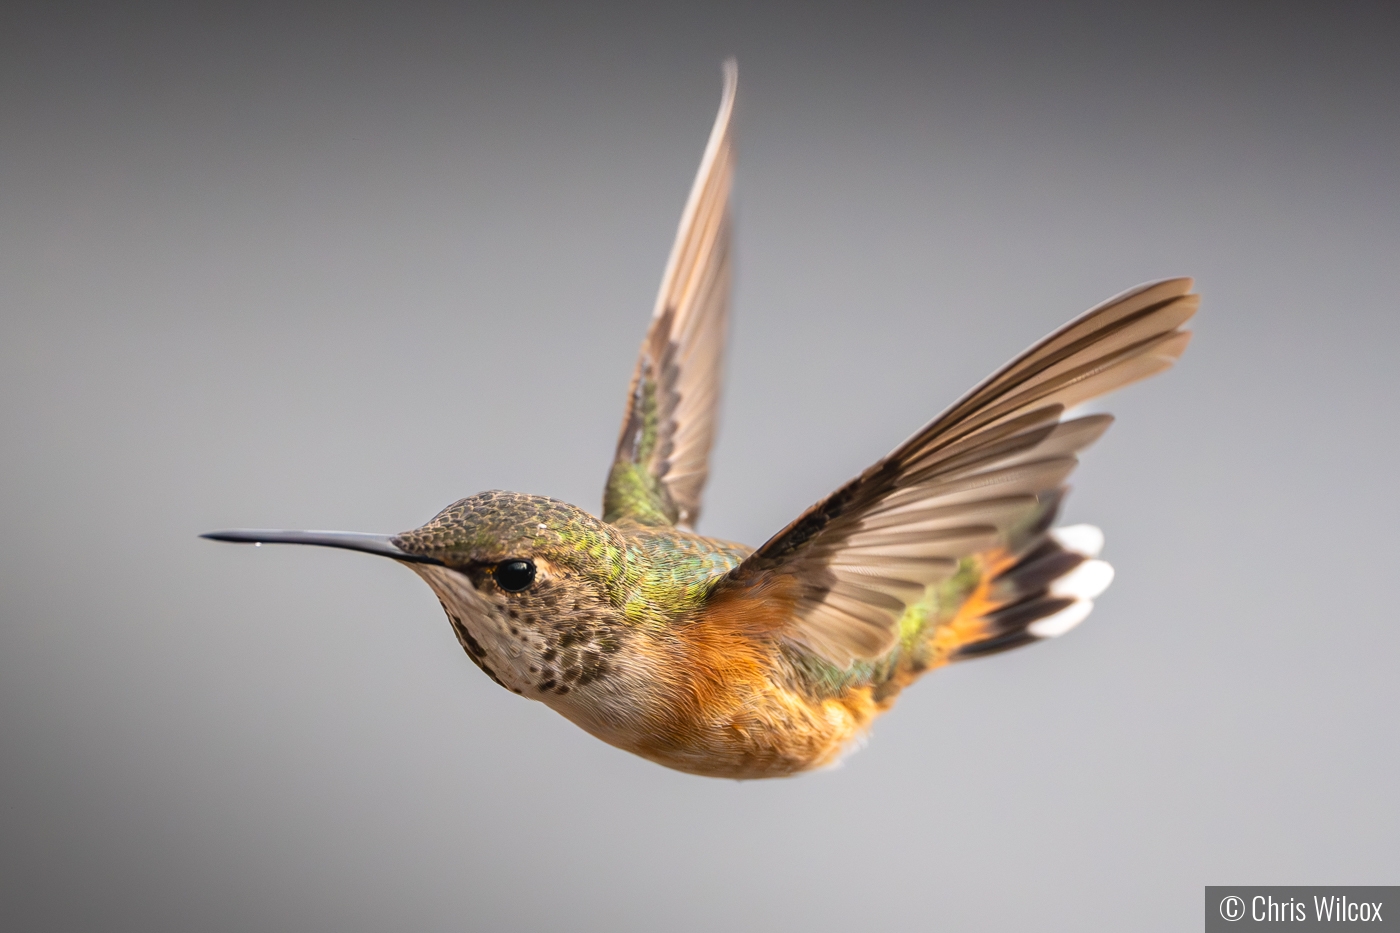 Rufous Hummingbird by Chris Wilcox